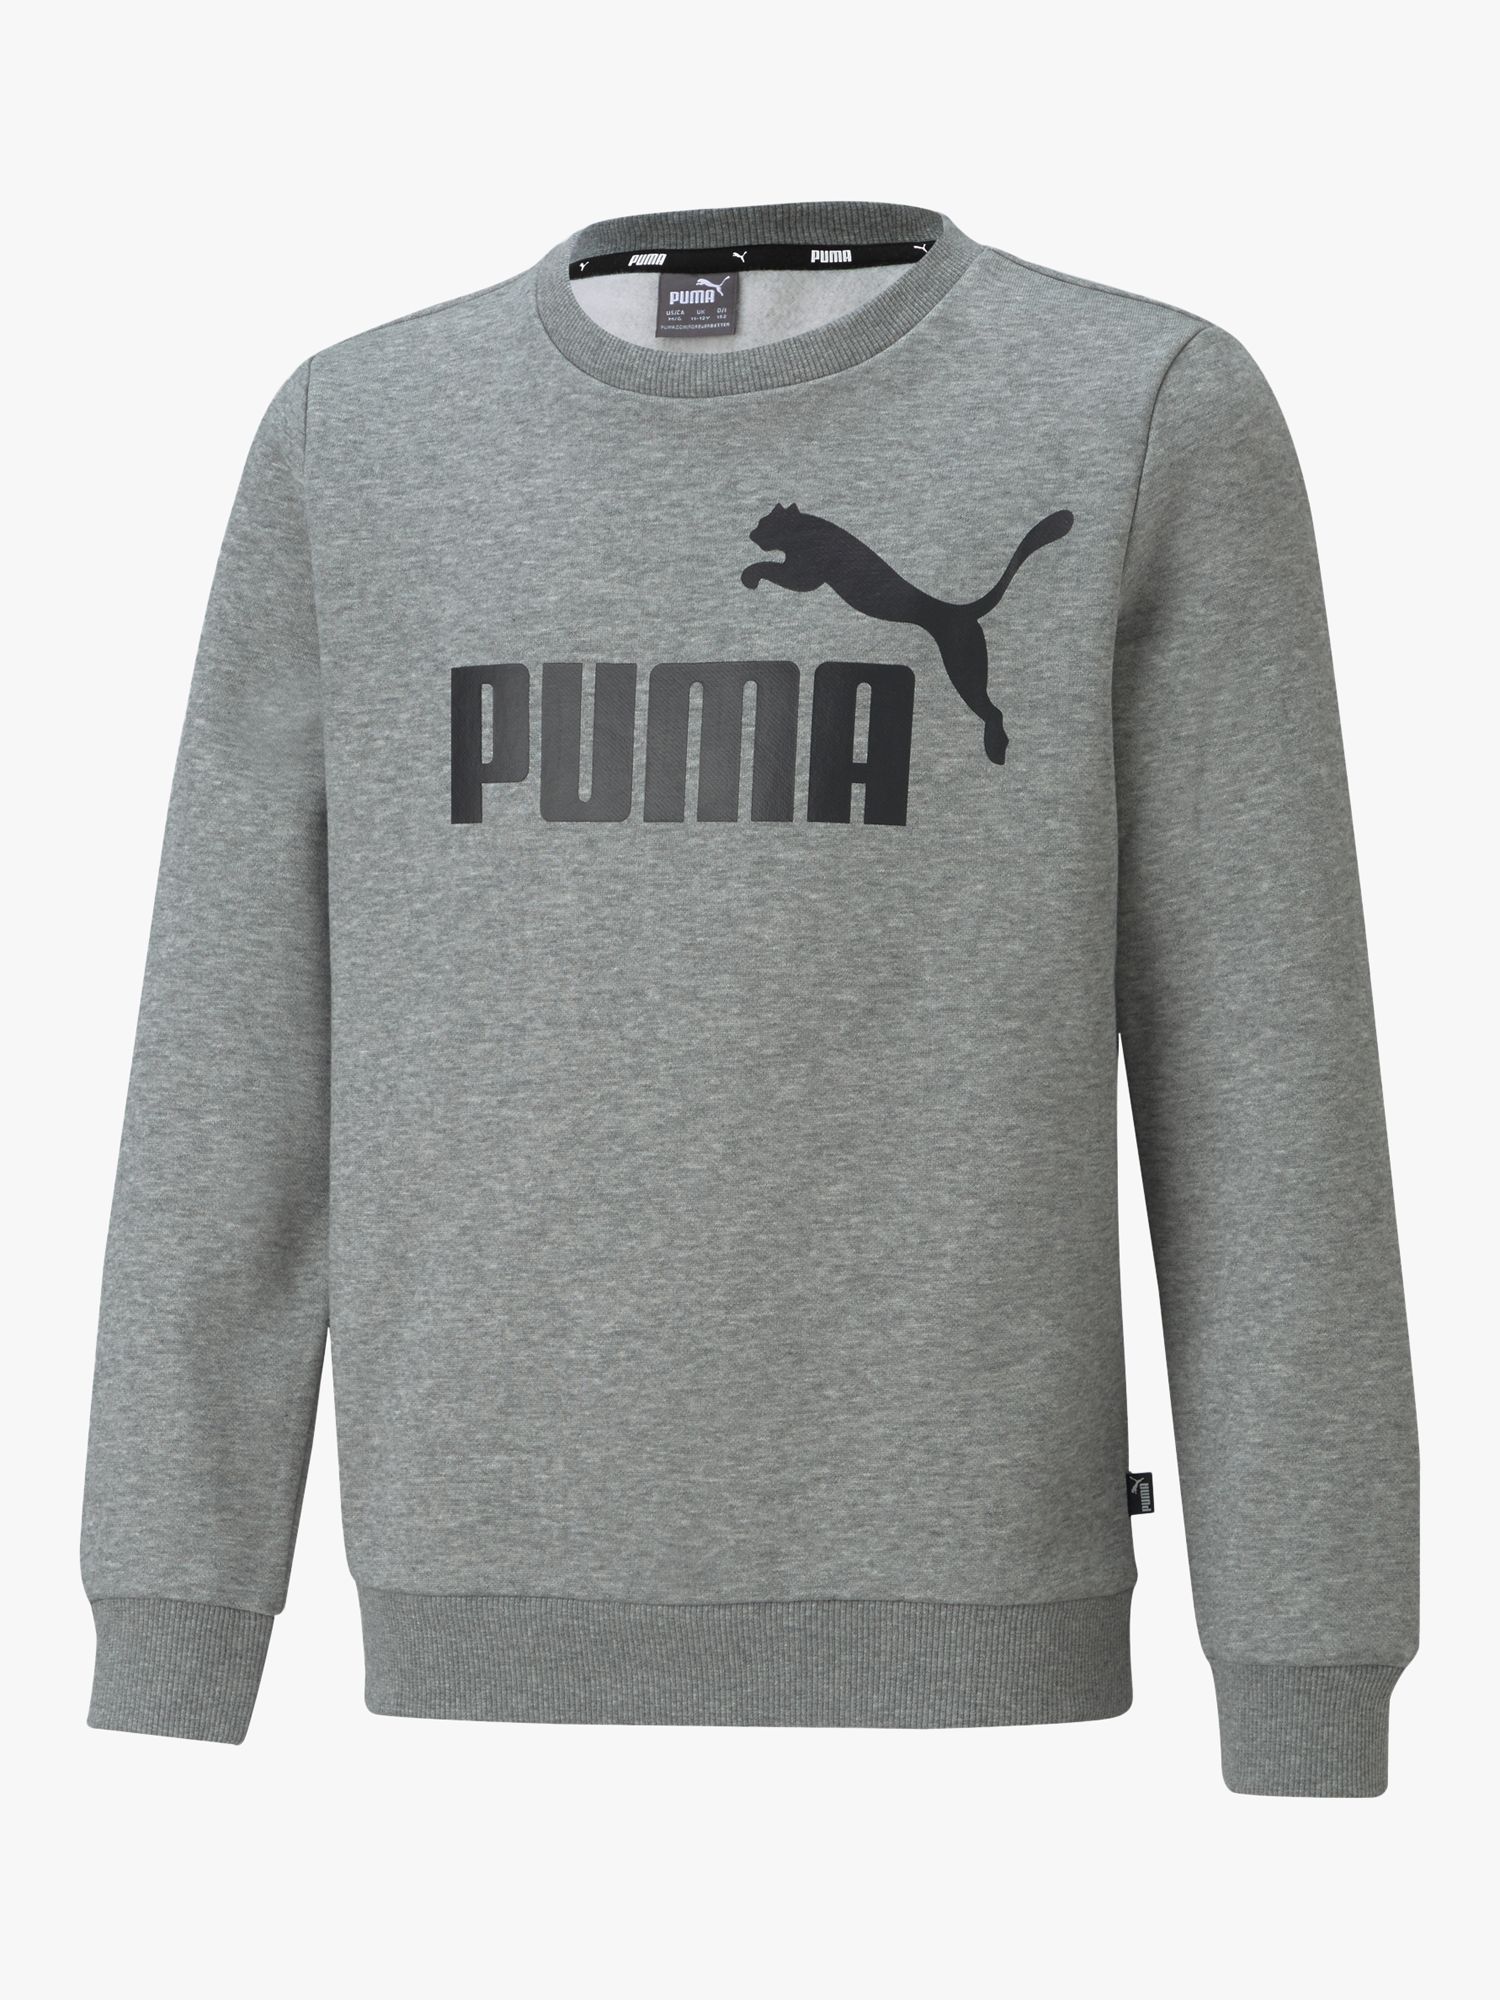 PUMA Kids' Essential Logo Crew Neck Sweatshirt, Light Grey